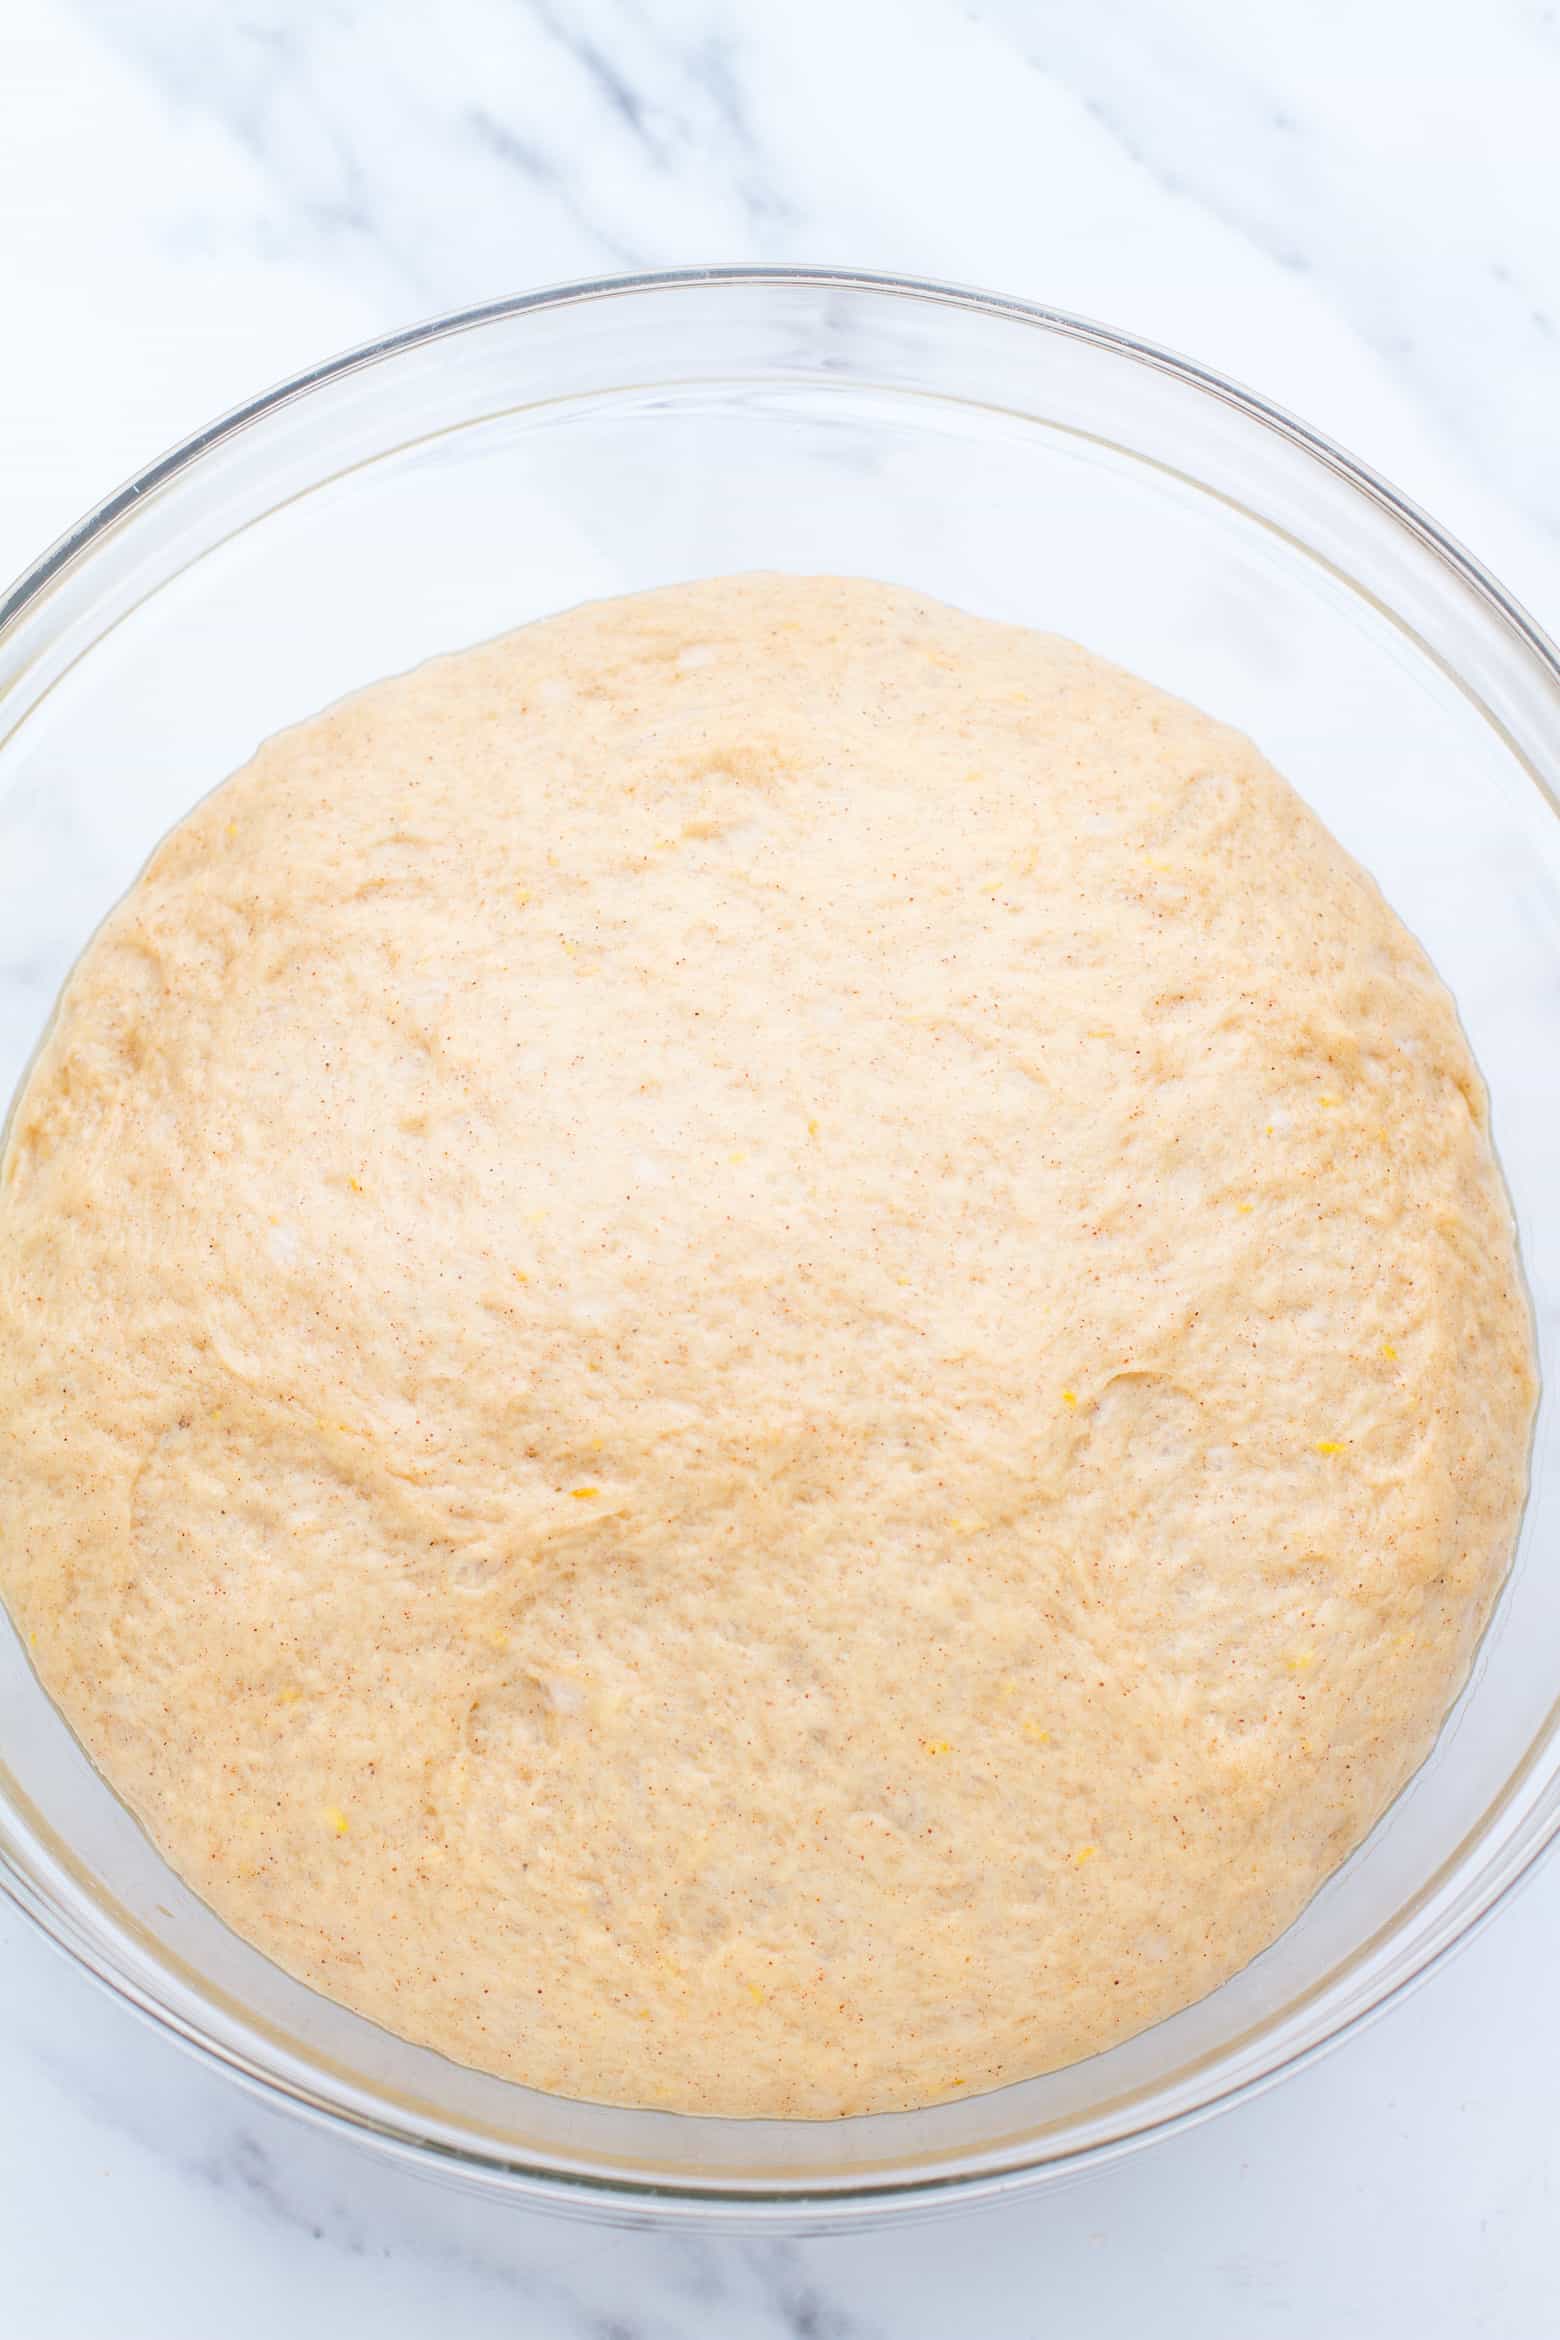 Sticky Bun dough in a glass bowl.